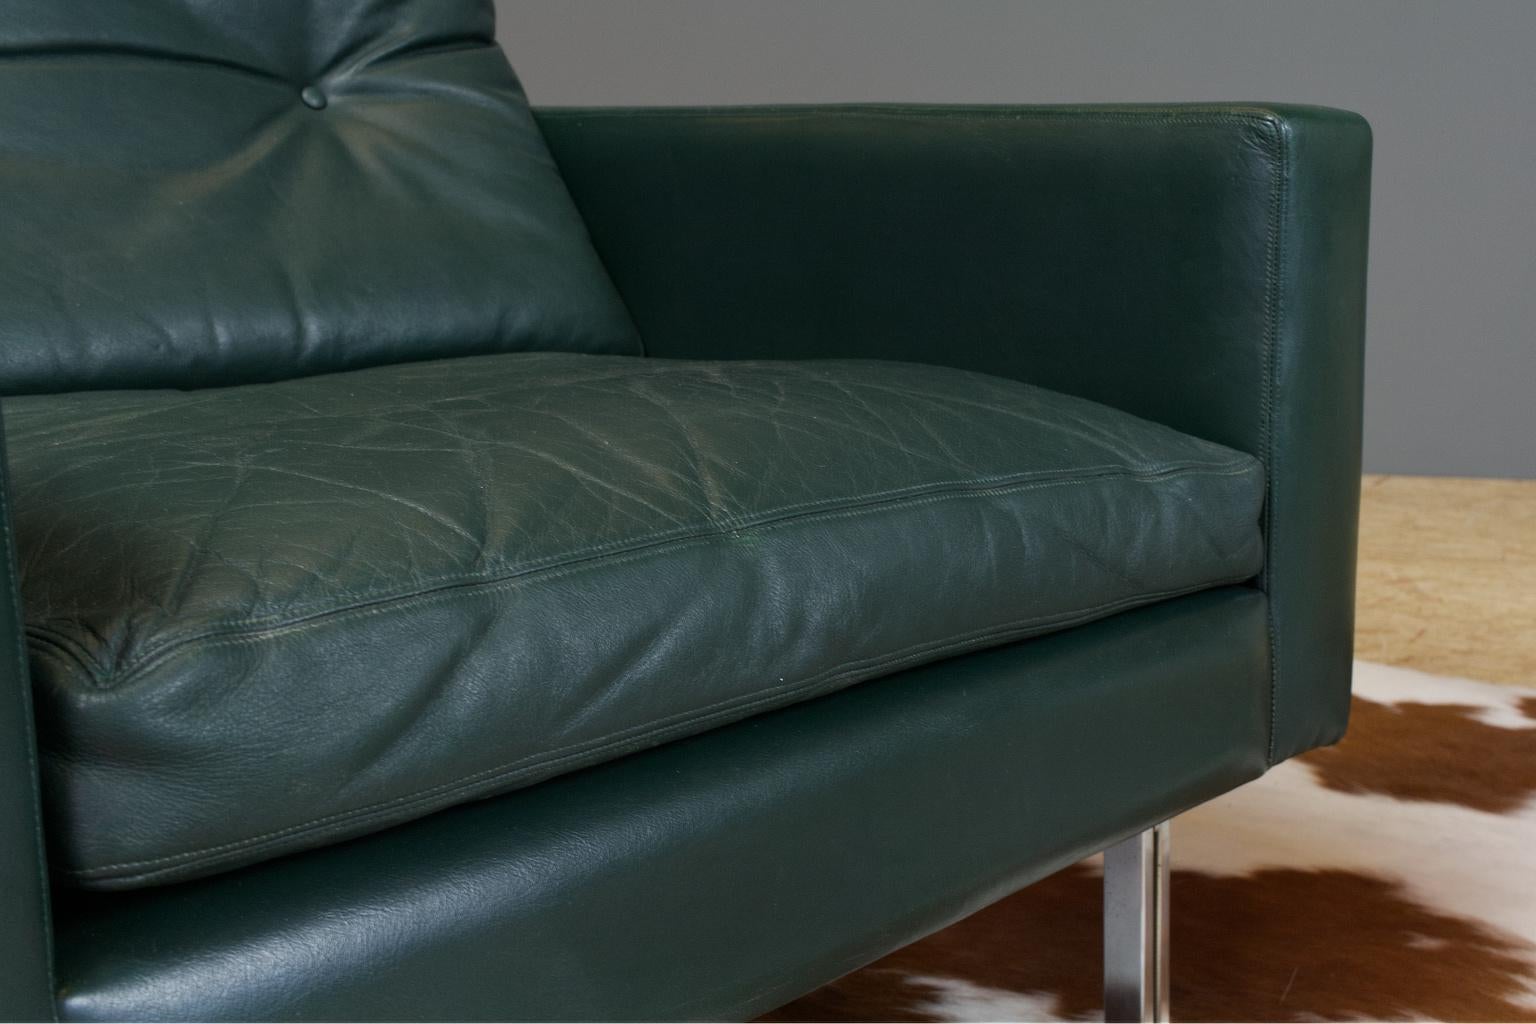 Chrome Vintage Green Leather Cubic Lounge Chair by Hein Salomonson, 1960s Dutch Design